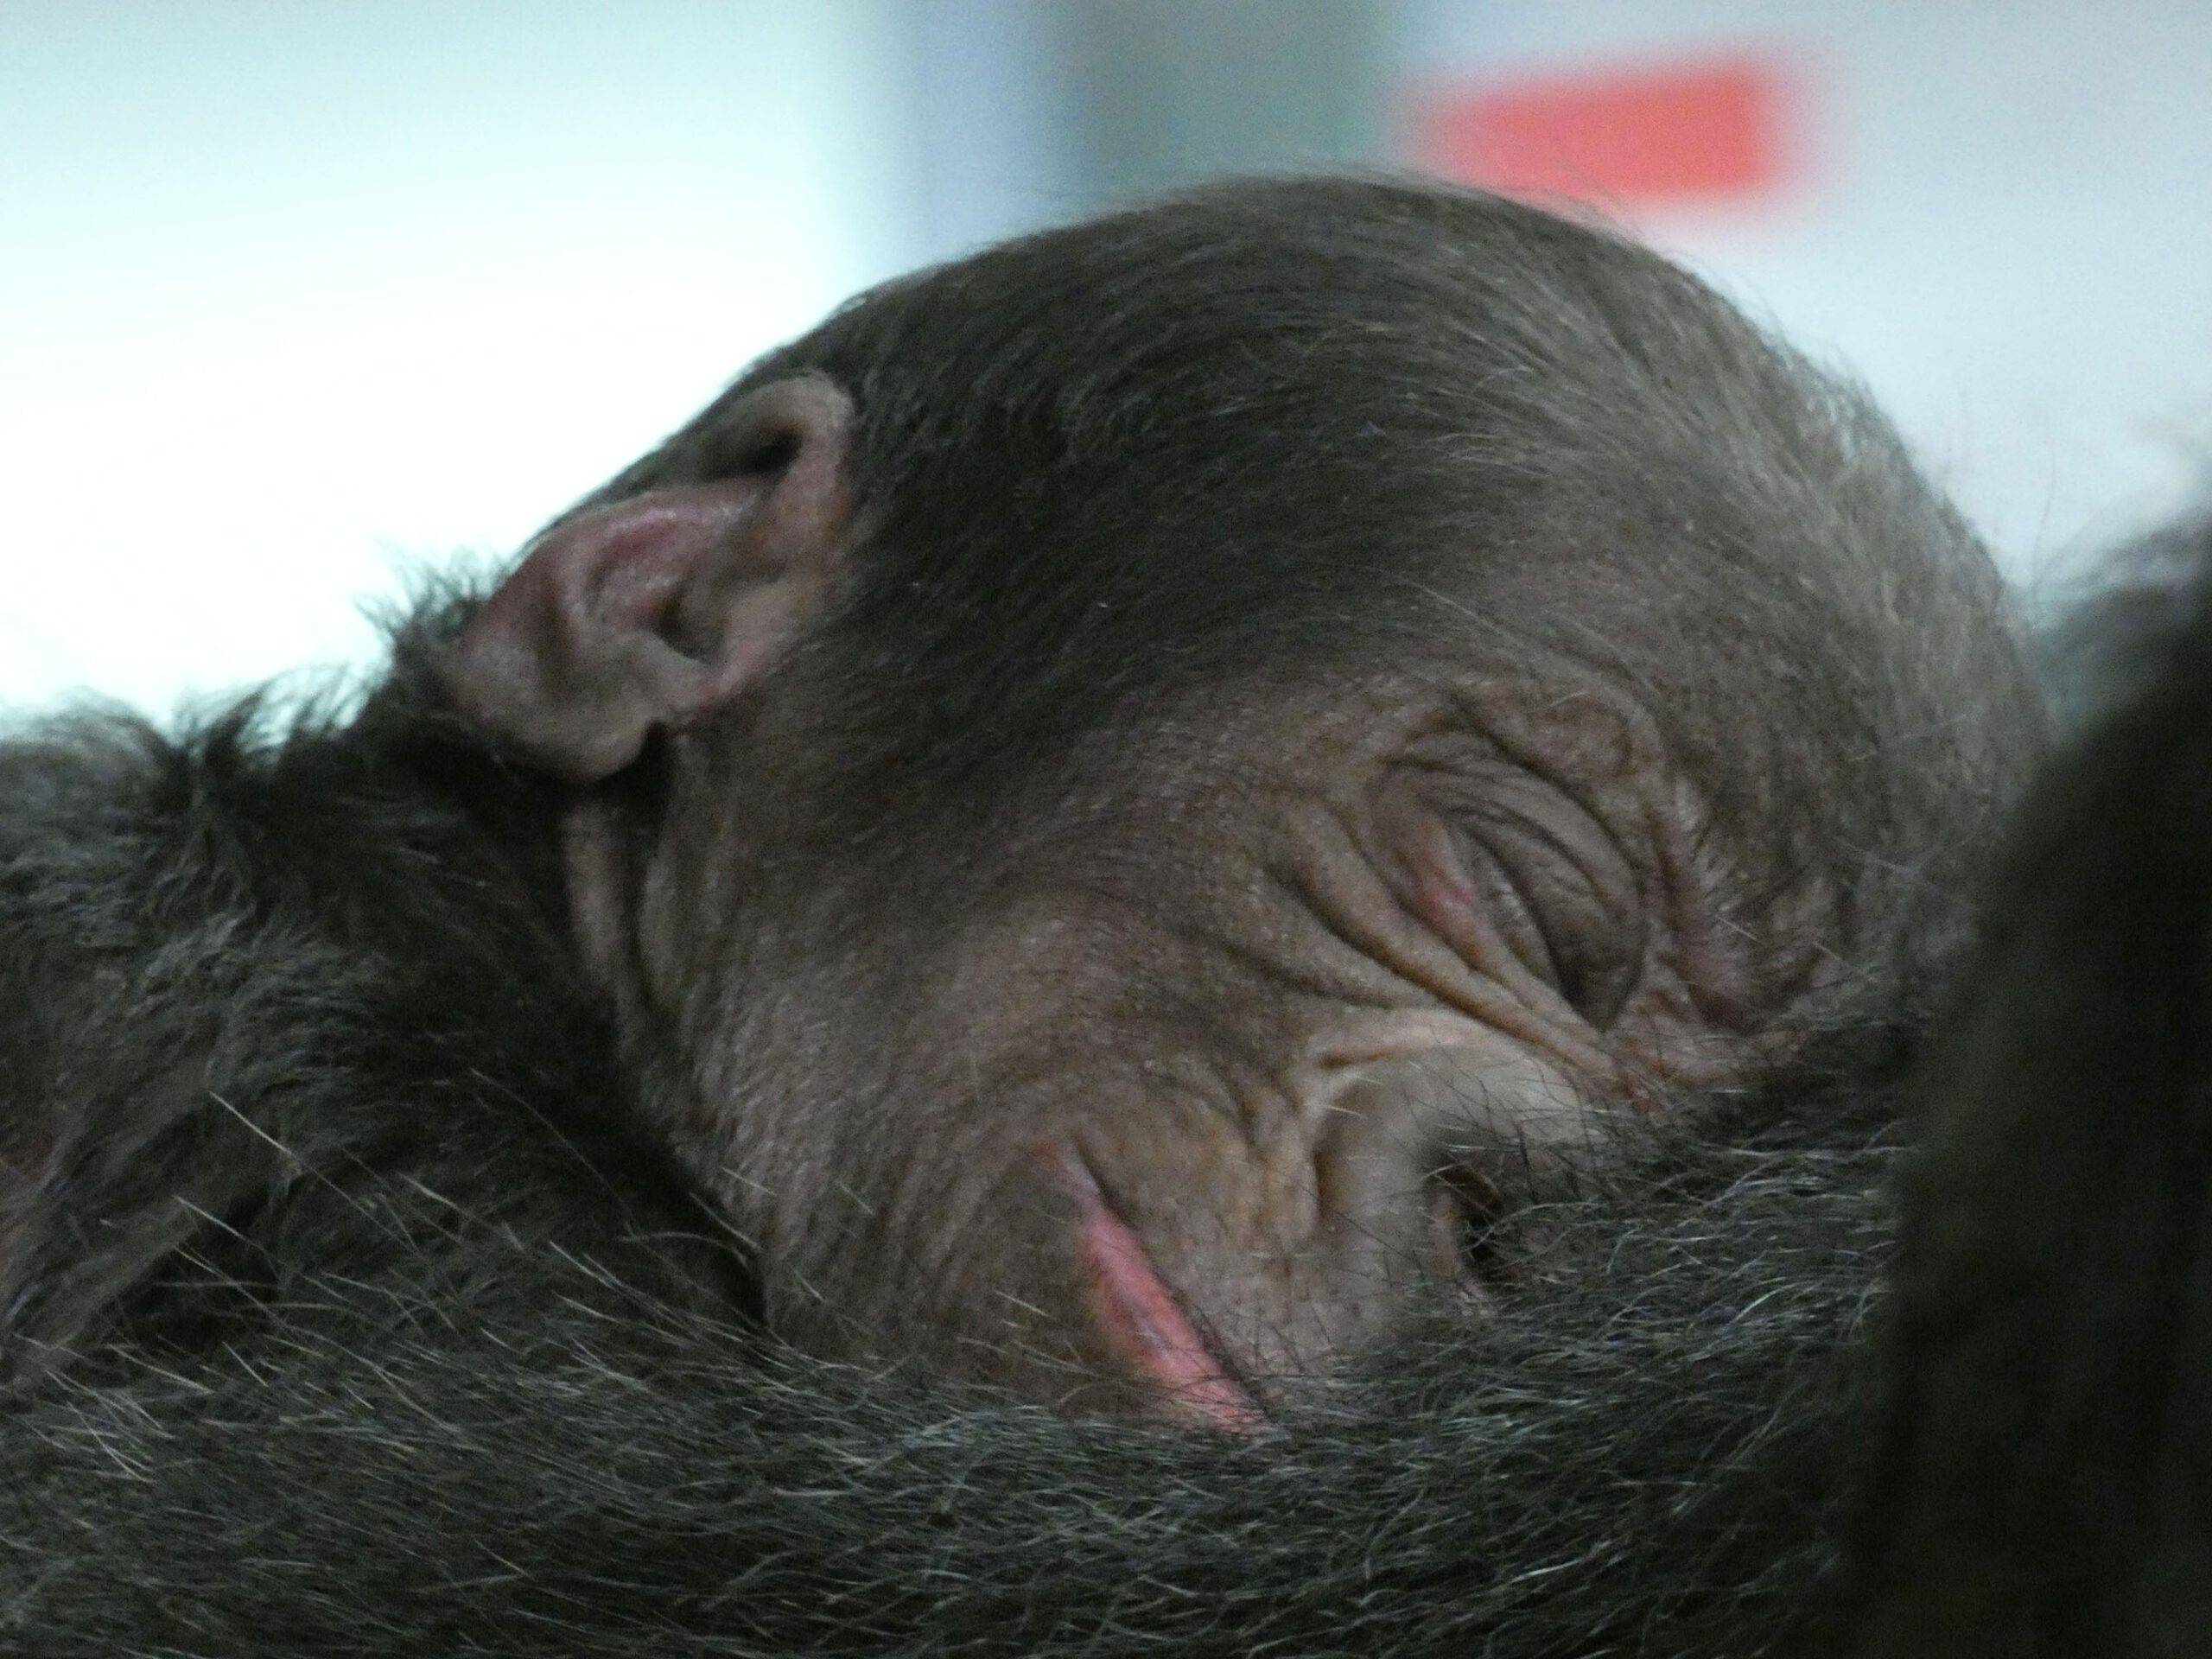 Gorilla and Hippopotamus born this week at Disney's Animal Kingdom